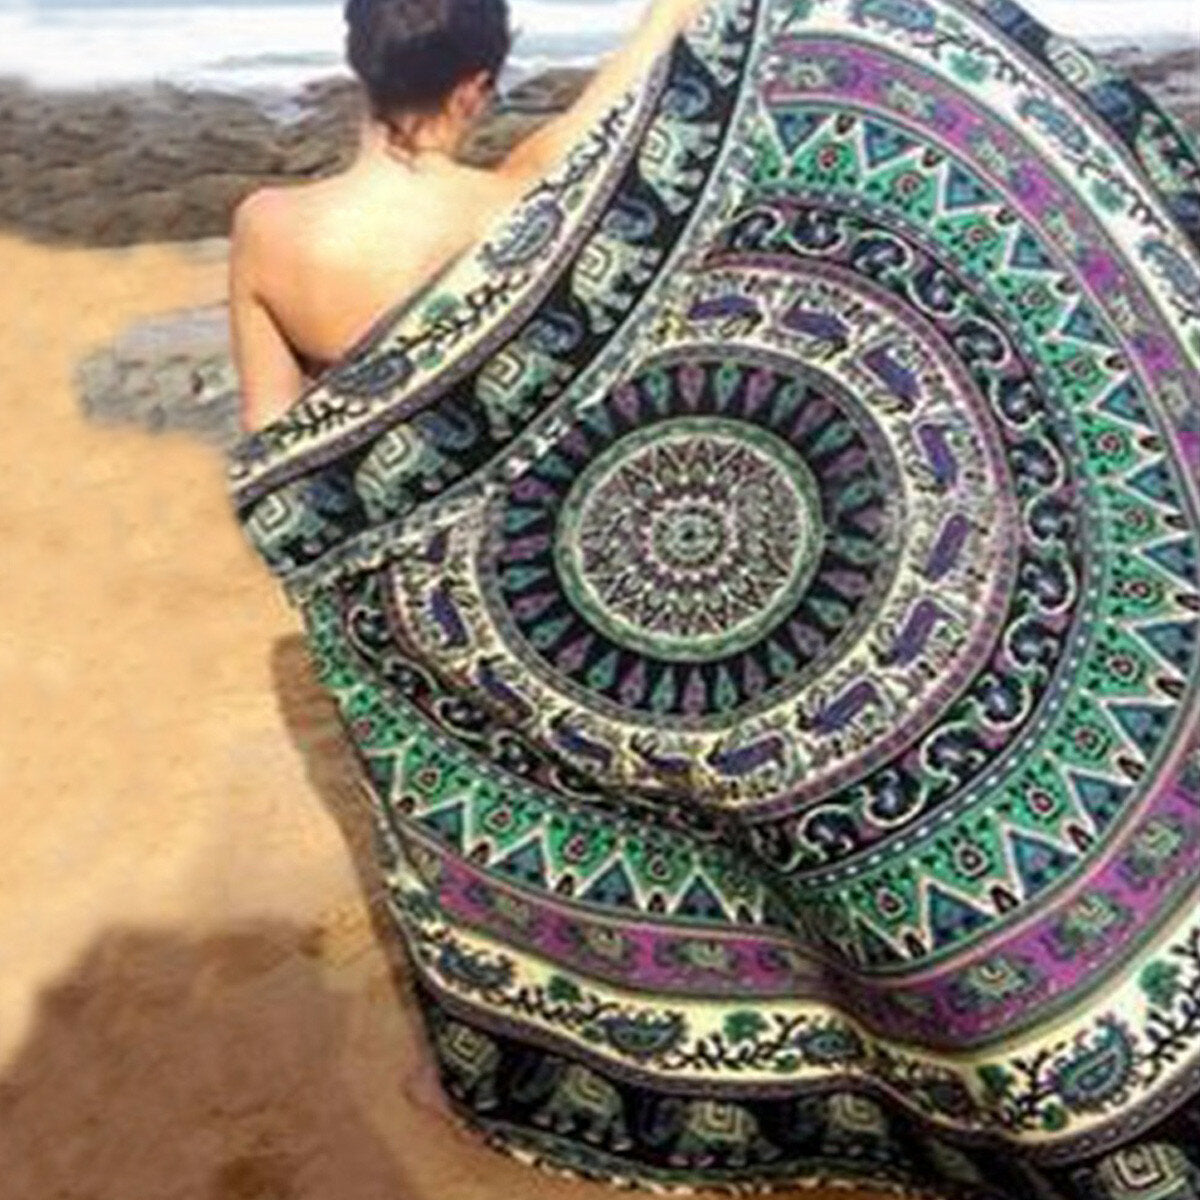 150cm Bohemian Thin Chiffon Beach Towel Mat Mandala Round Silk Scarf Bed Sheet Tapestry